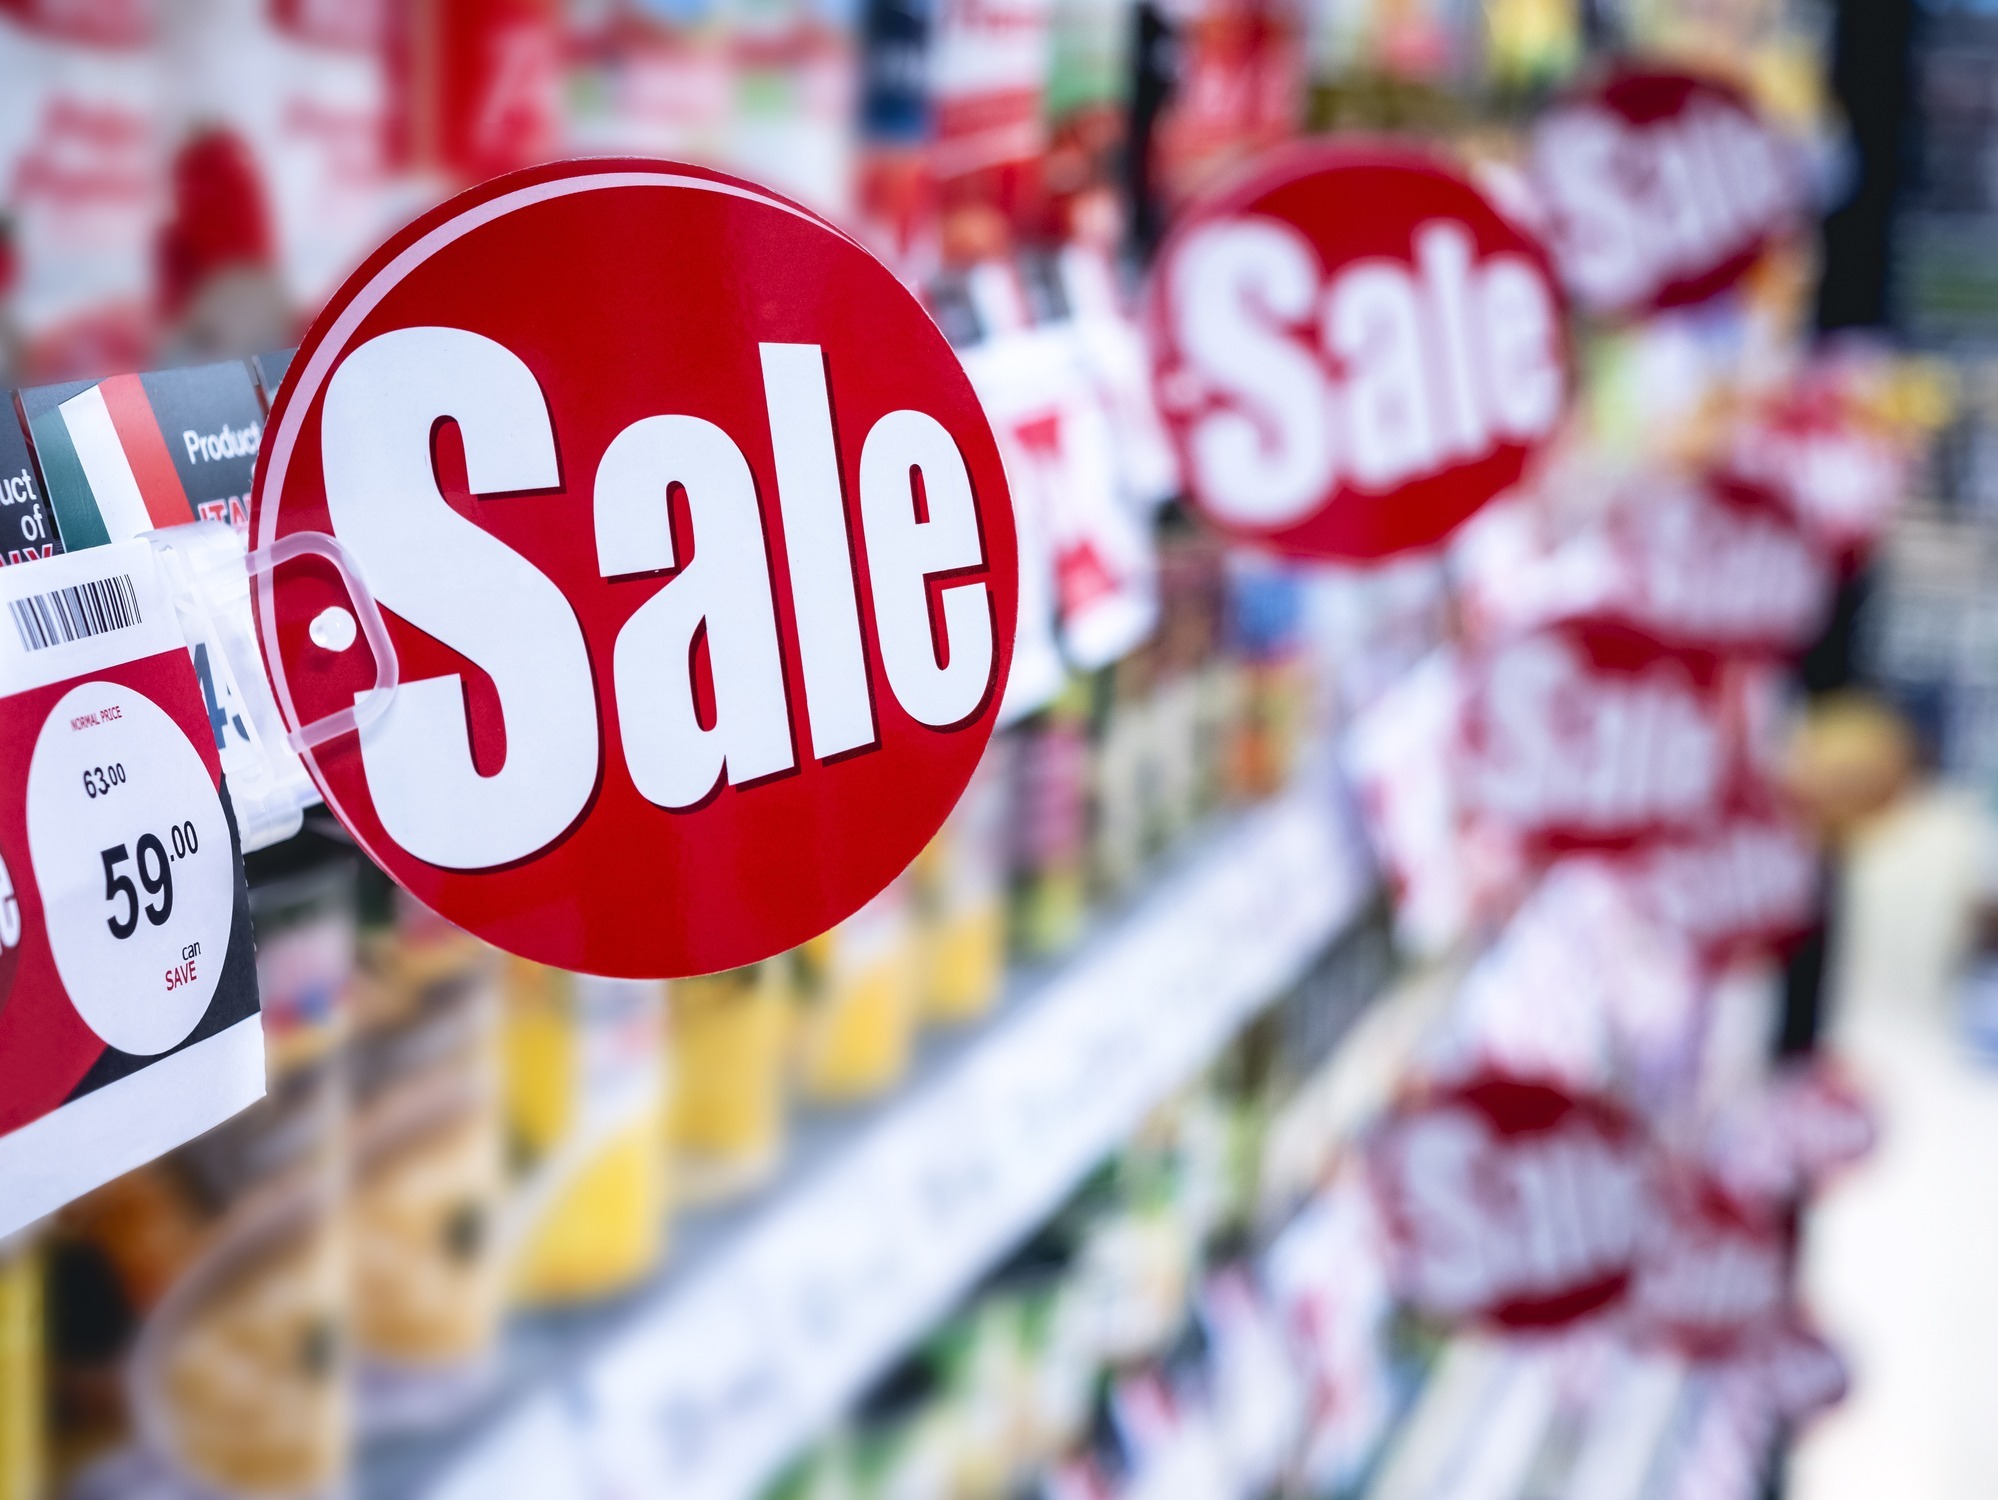 Sale-signage-Supermarket-shelf-Marketing-Promotion-Discount-sign-in-supermarket-Retail-Business